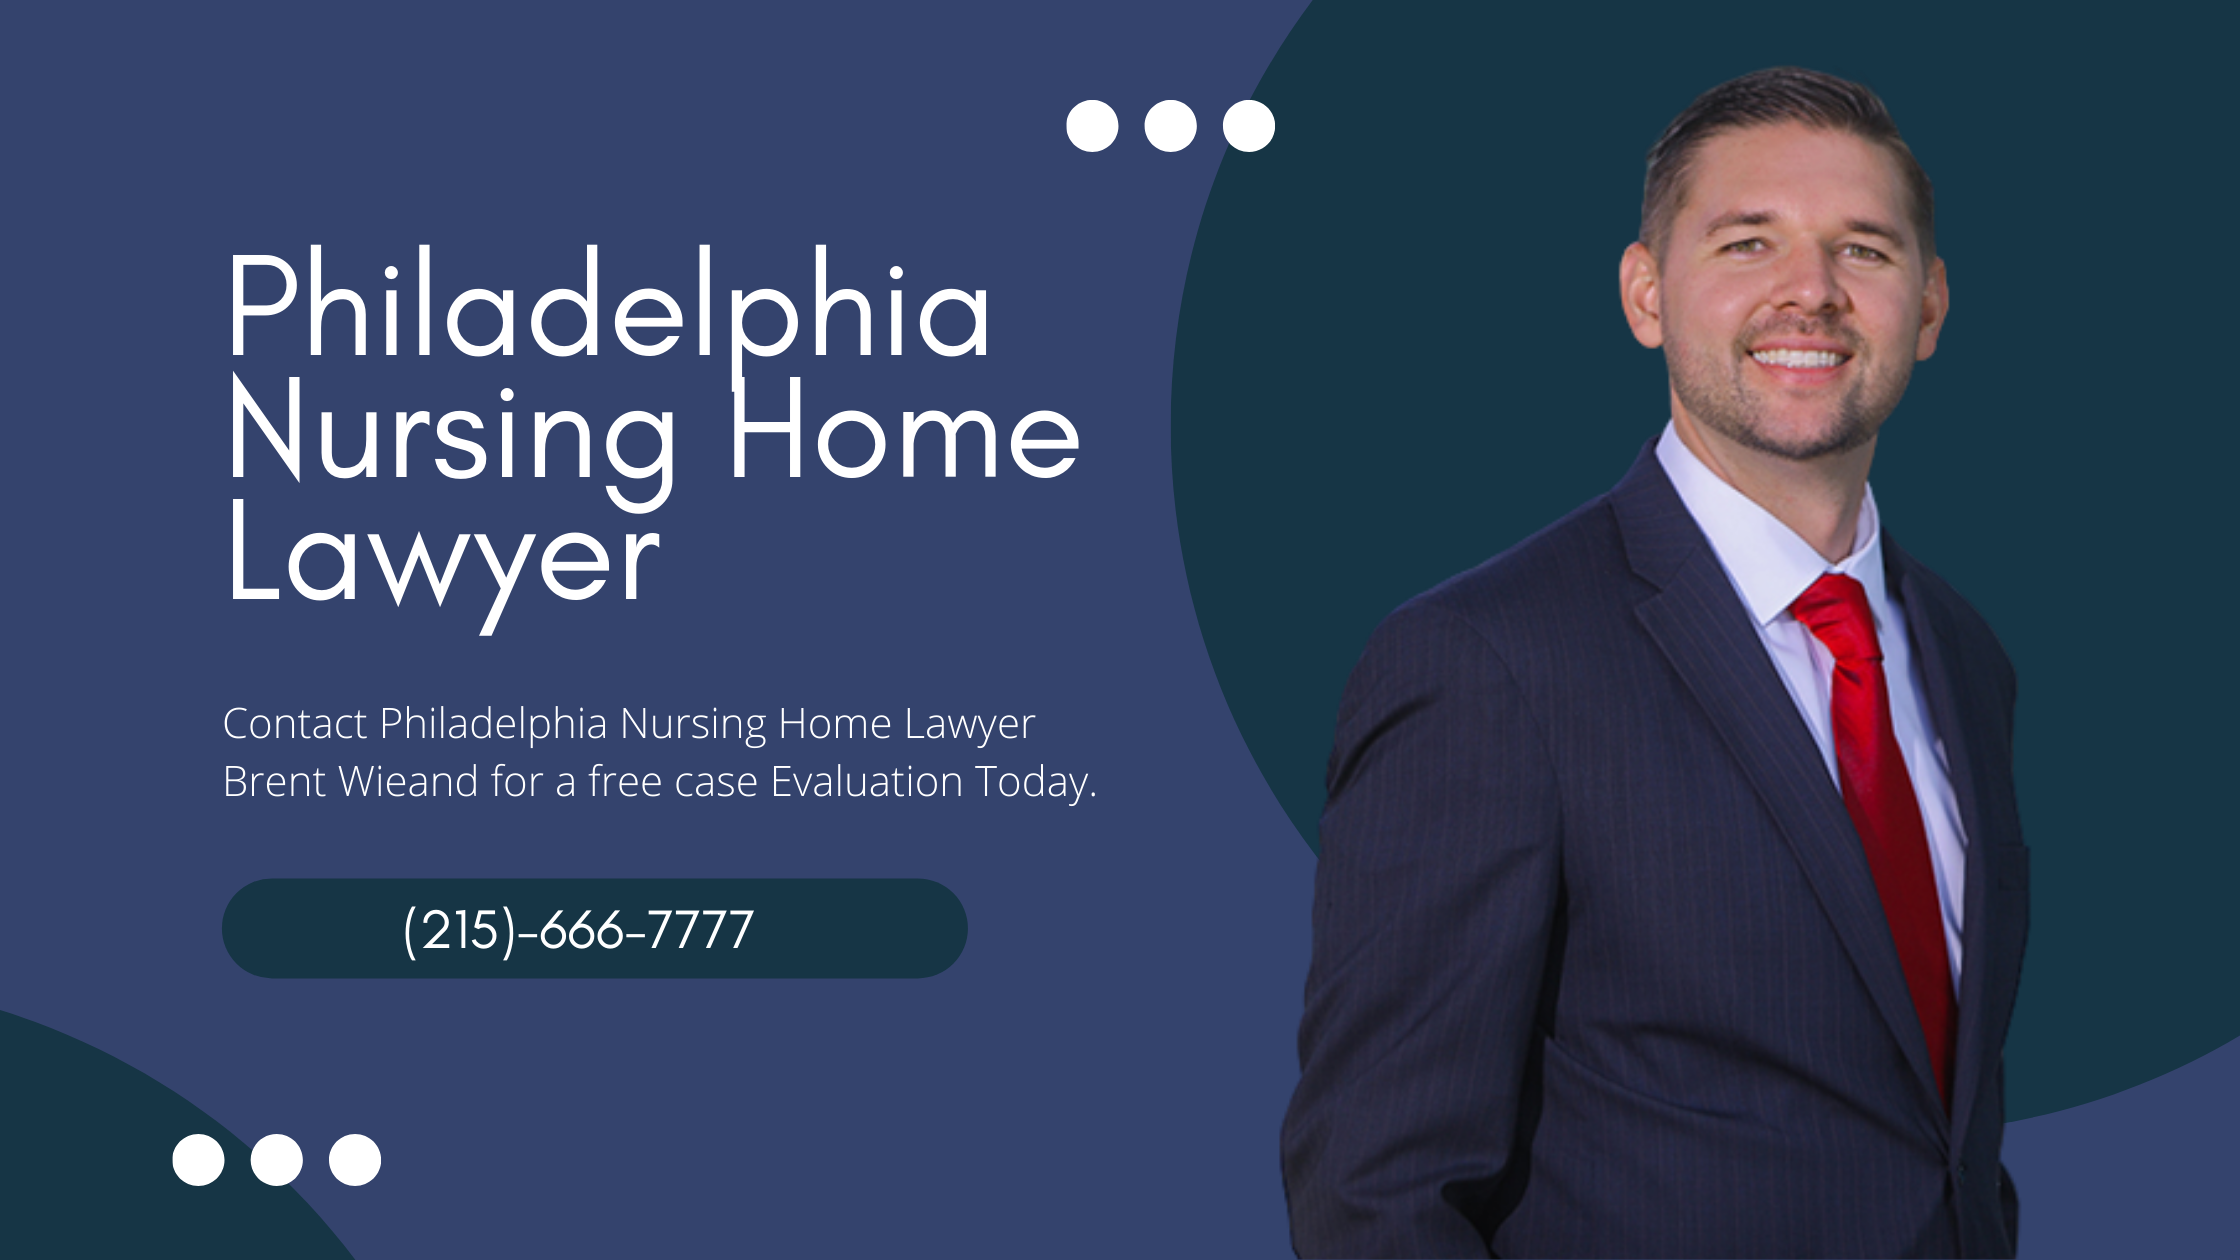 Contact Philadelphia Nursing Home Lawyer Brent Wieand